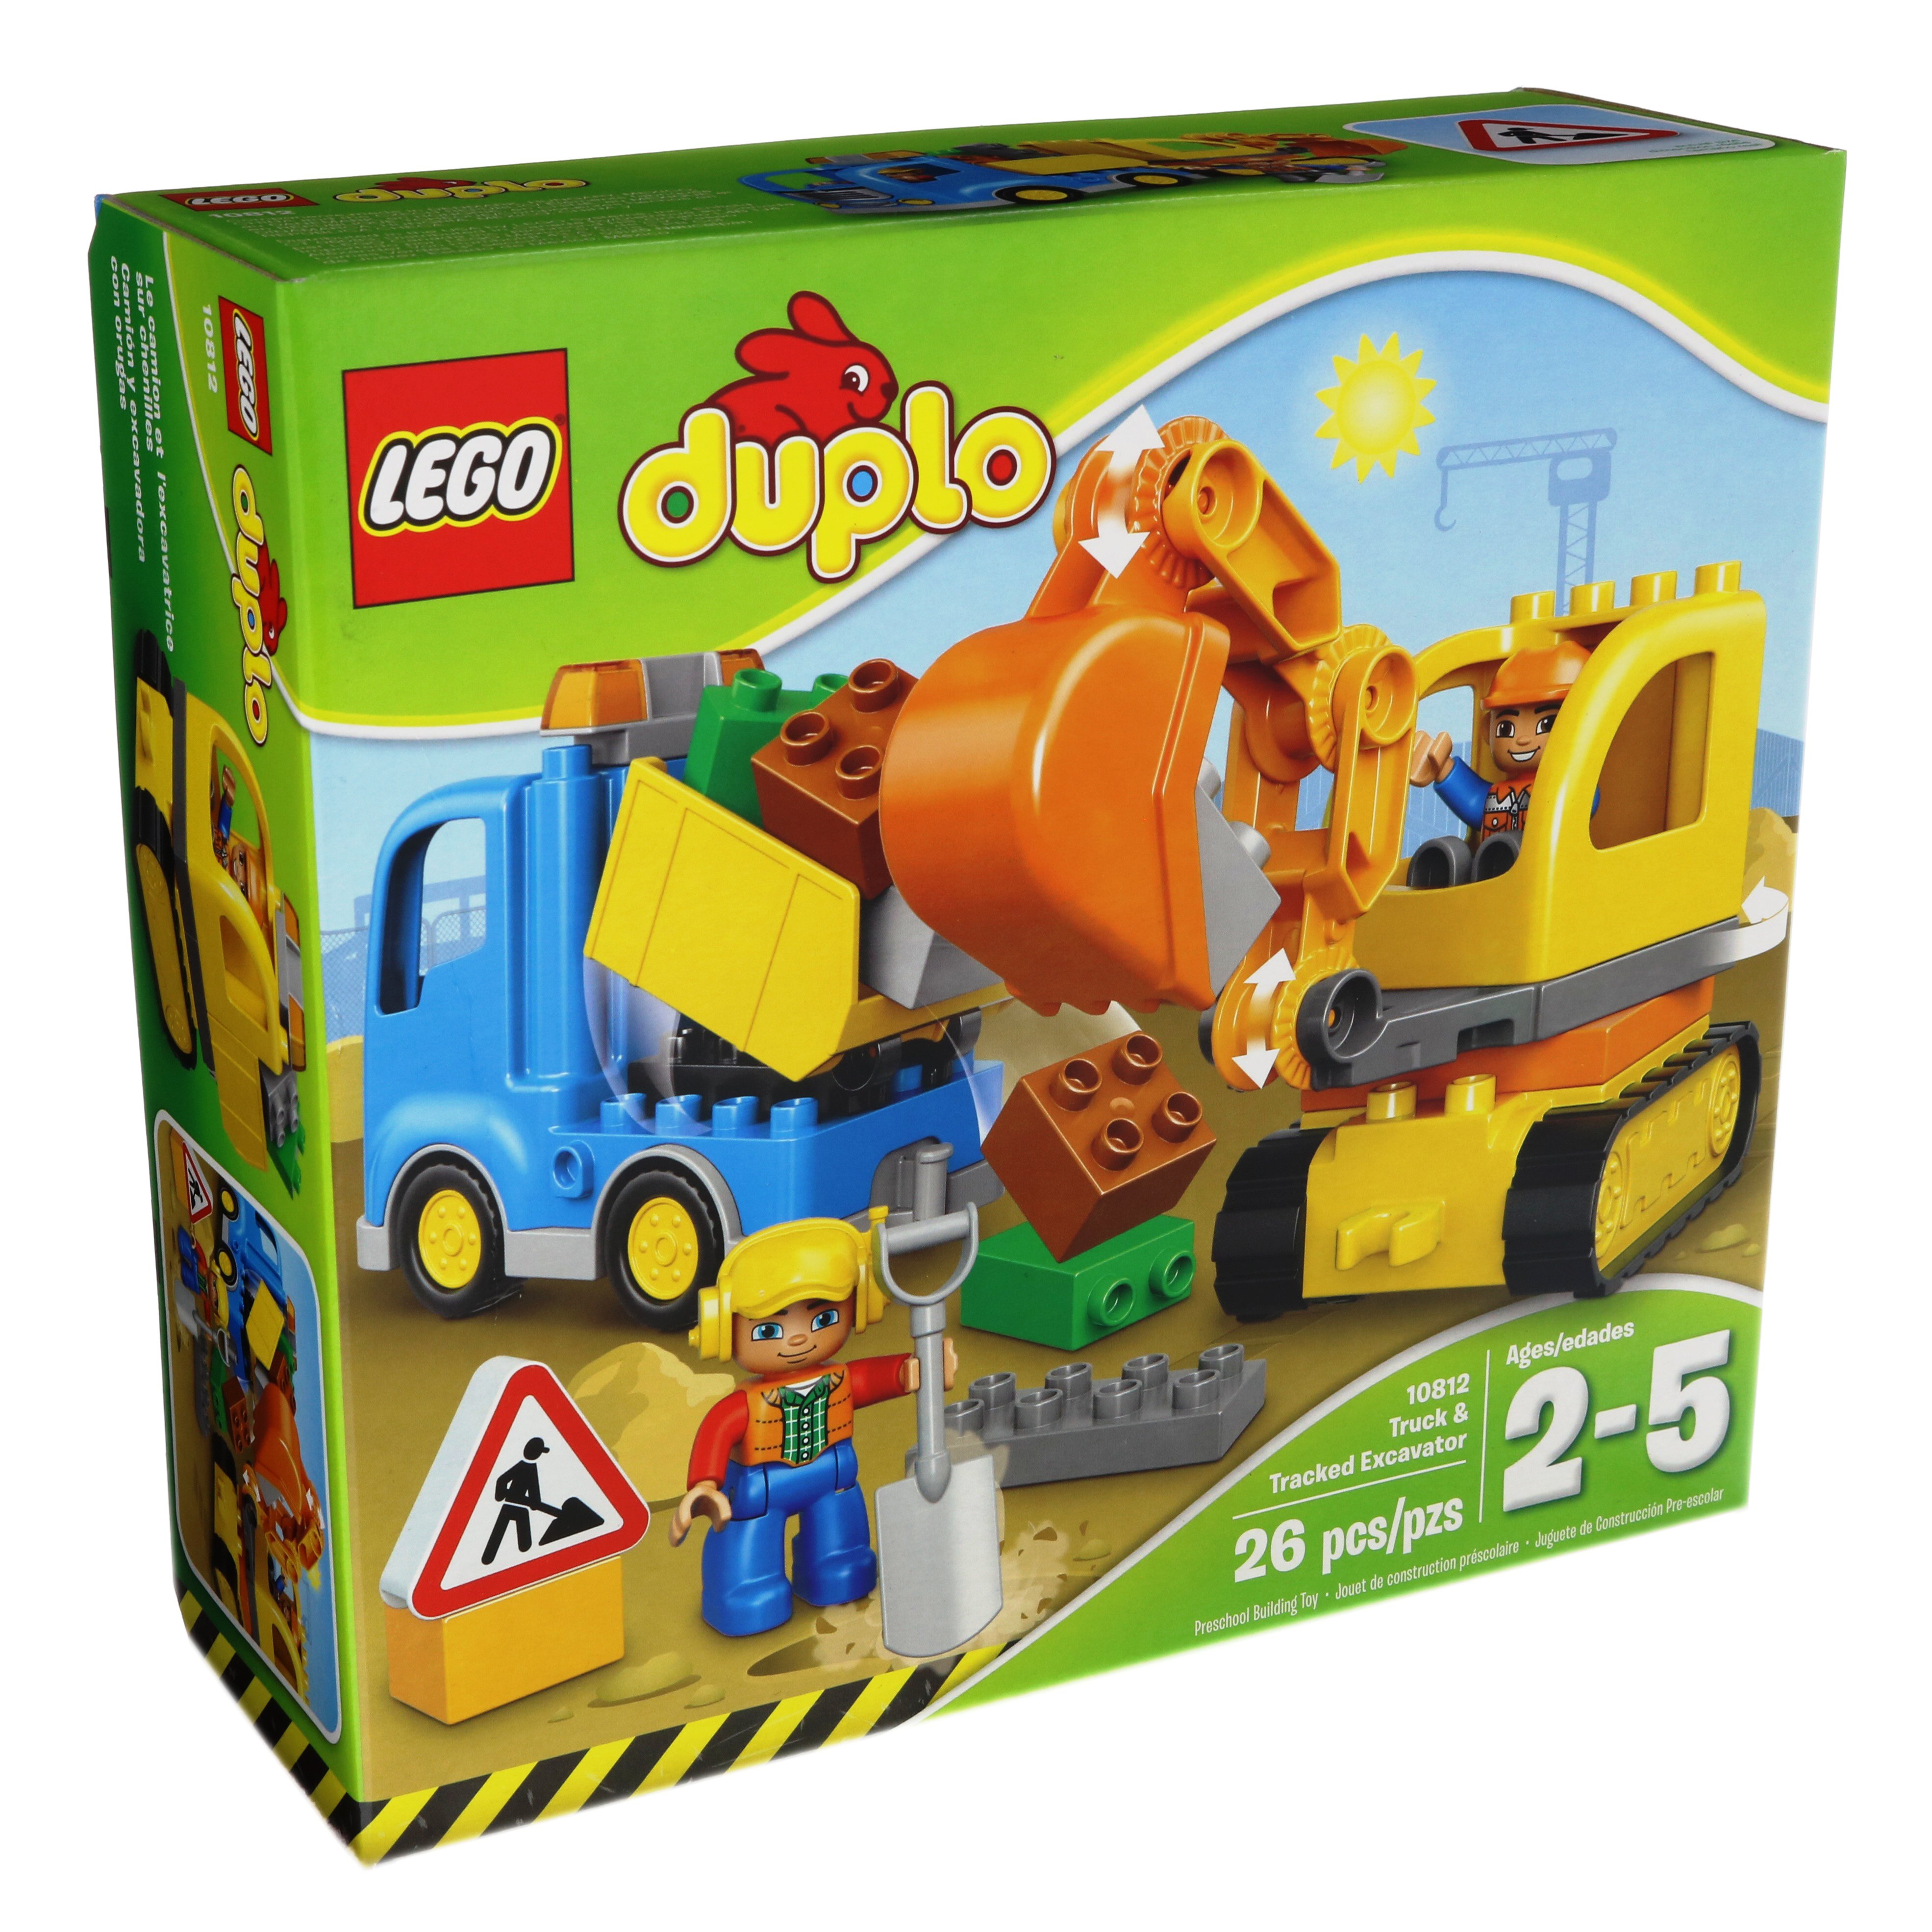 lego duplo truck & tracked excavator